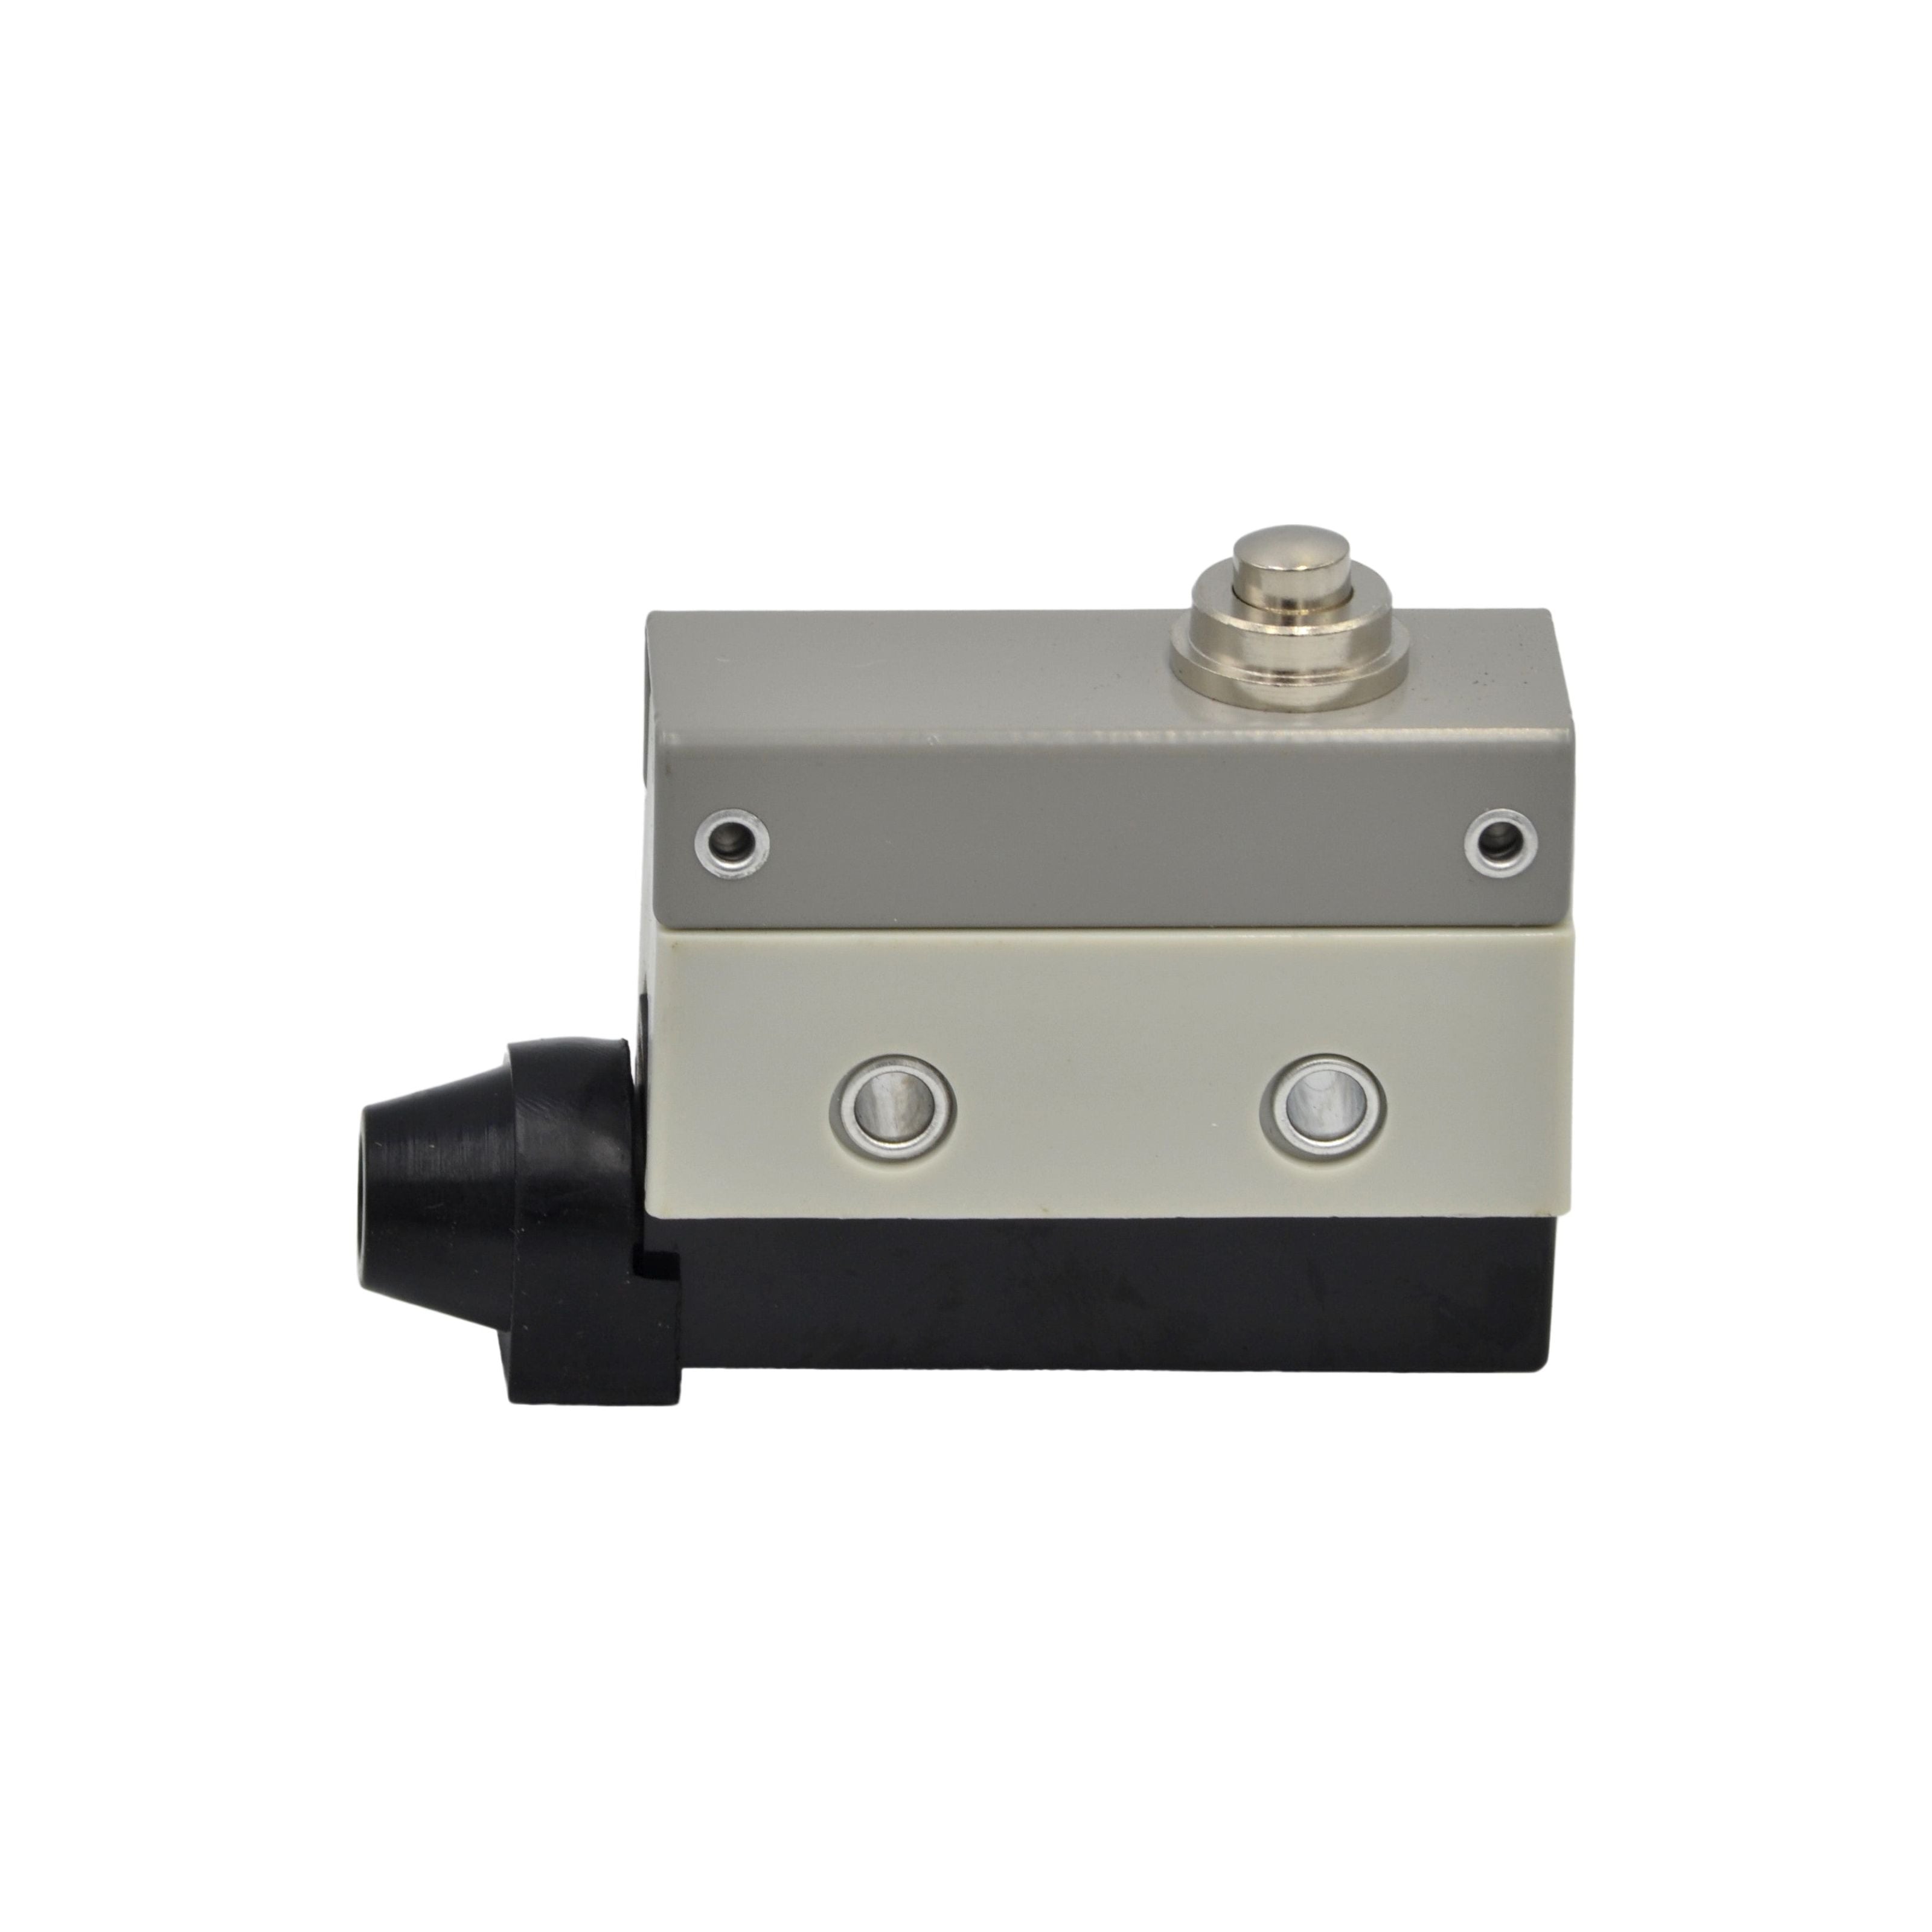 AZ-7100 Plunger Style Actuator Limit Switch